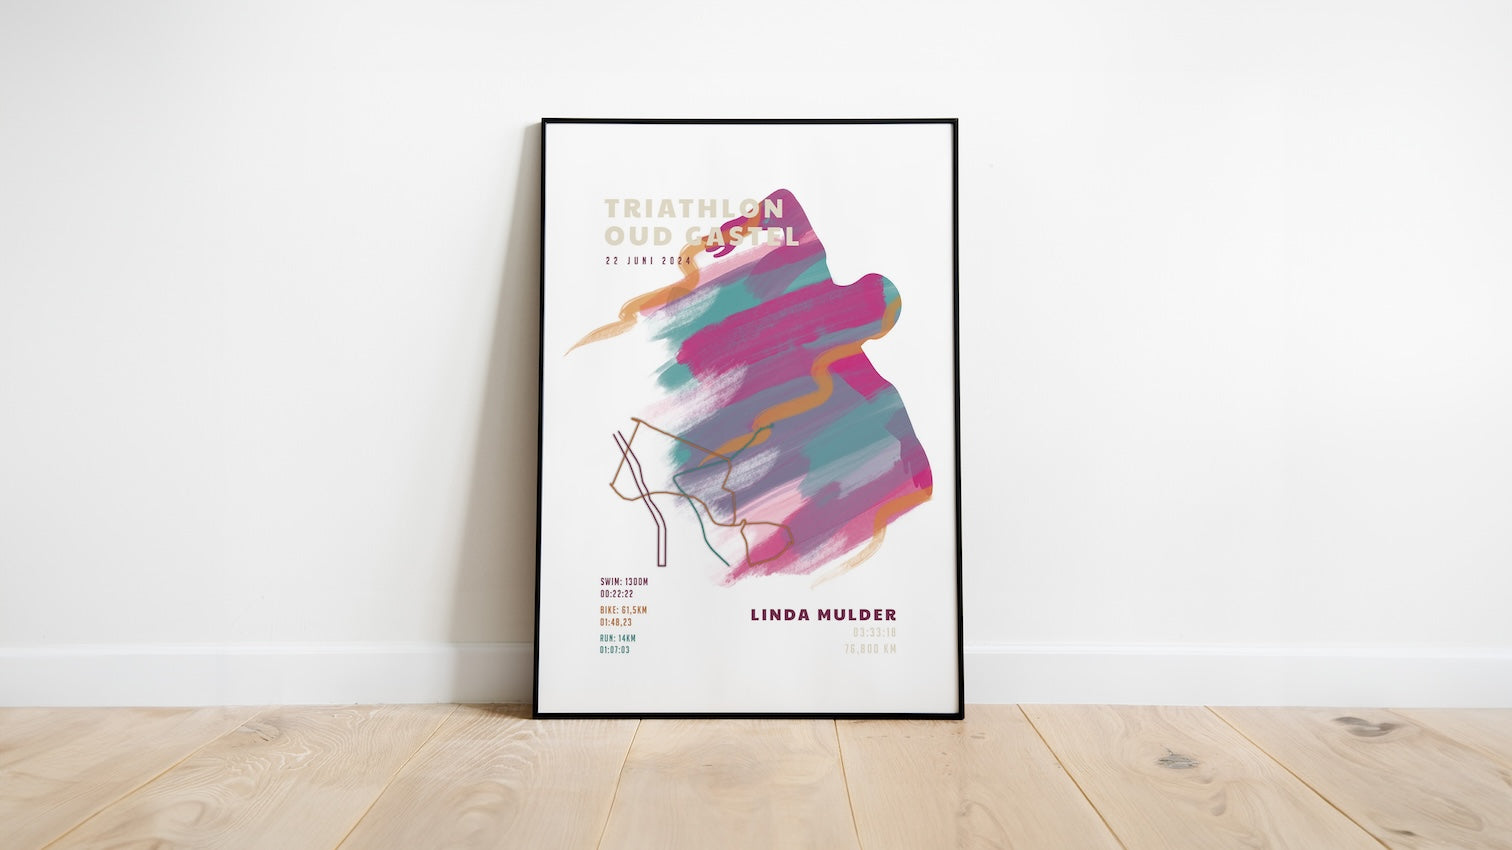 Triathlon Oud Gastel - Sportive Art - Poster